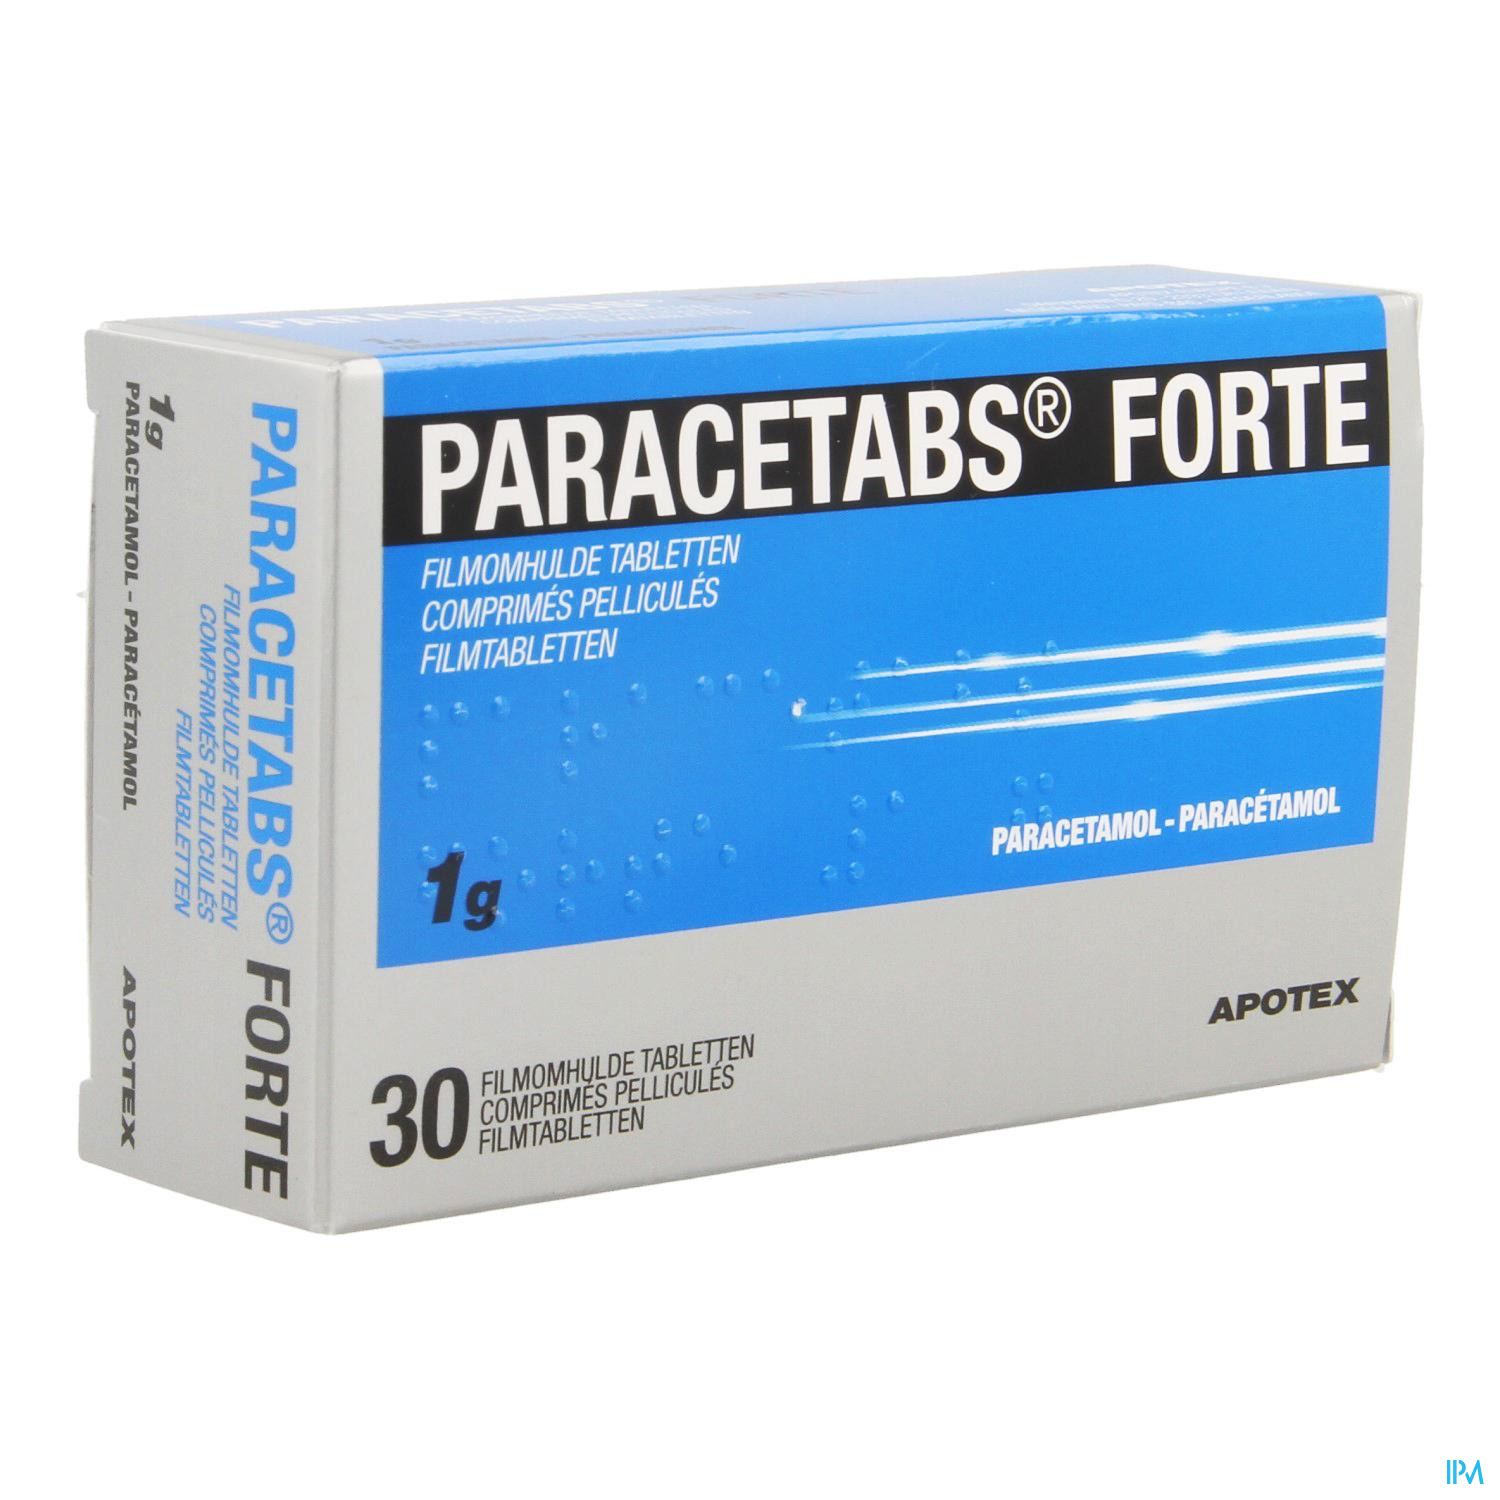 Paracetabs Forte 1g Filmomh Tabl 30 X 1g